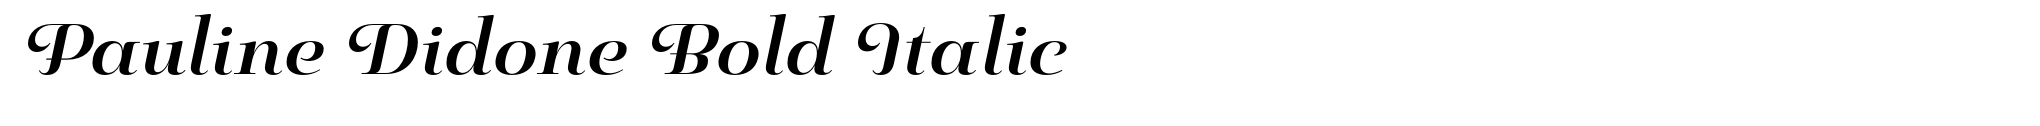 Pauline Didone Bold Italic image